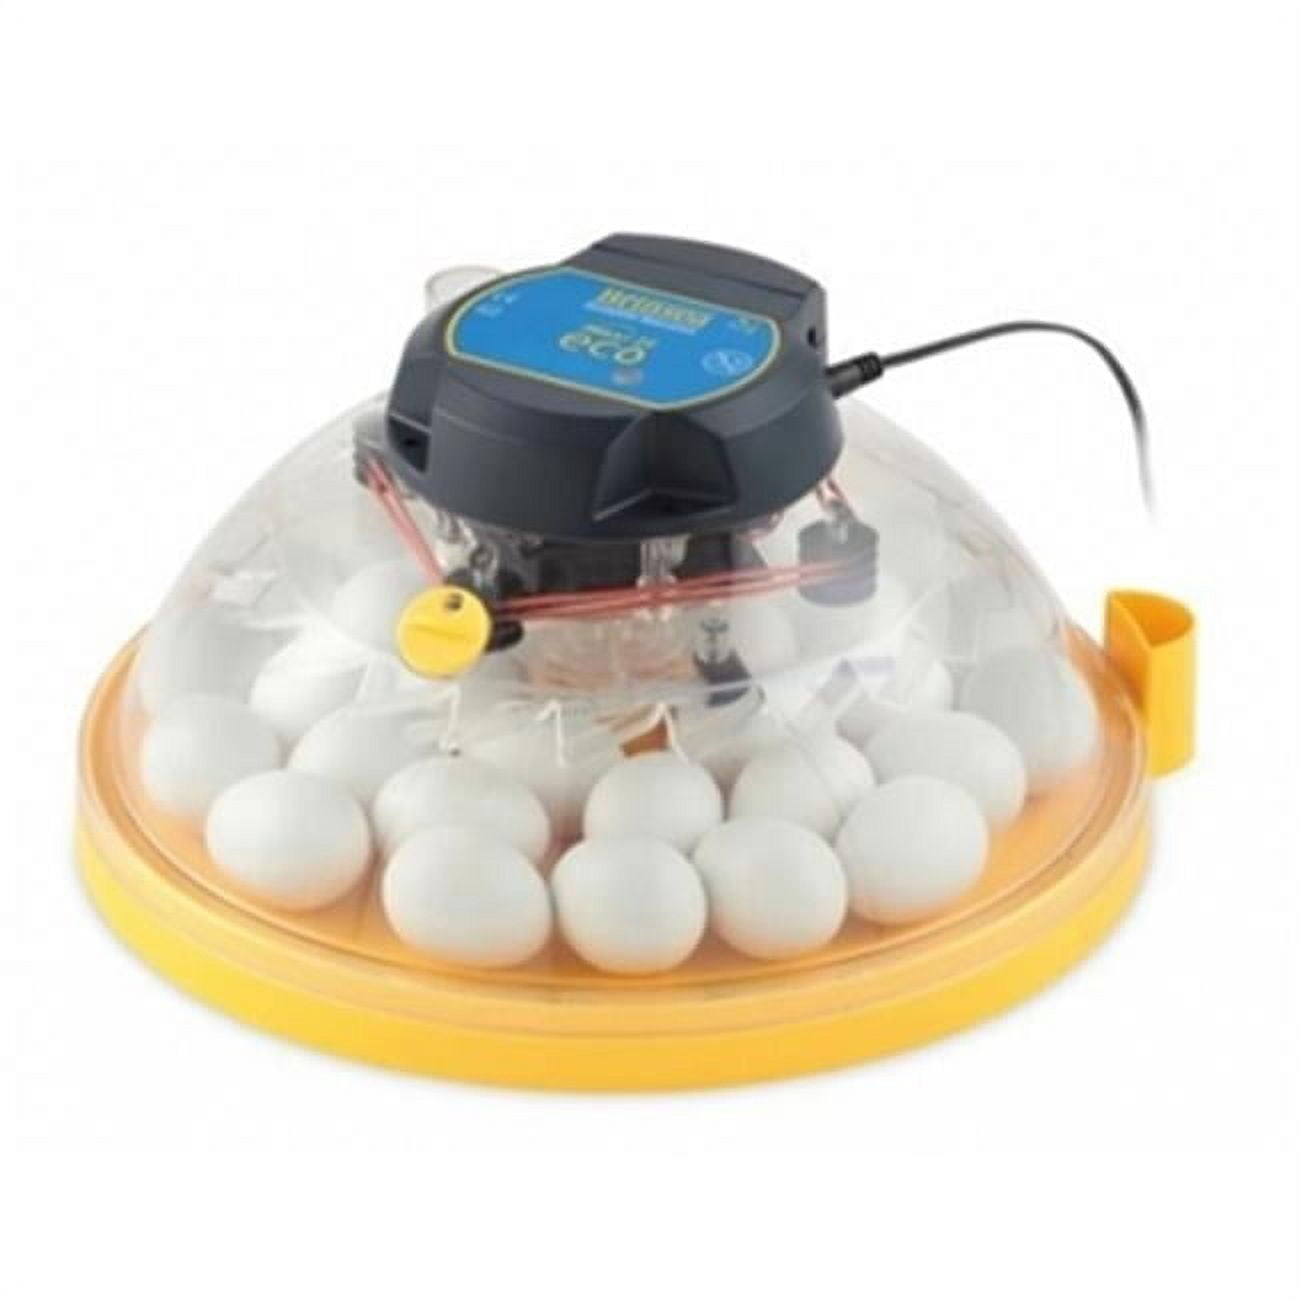 Picture of Brinsea Products USAC25C Maxi II Eco Manual 30 Egg Incubator